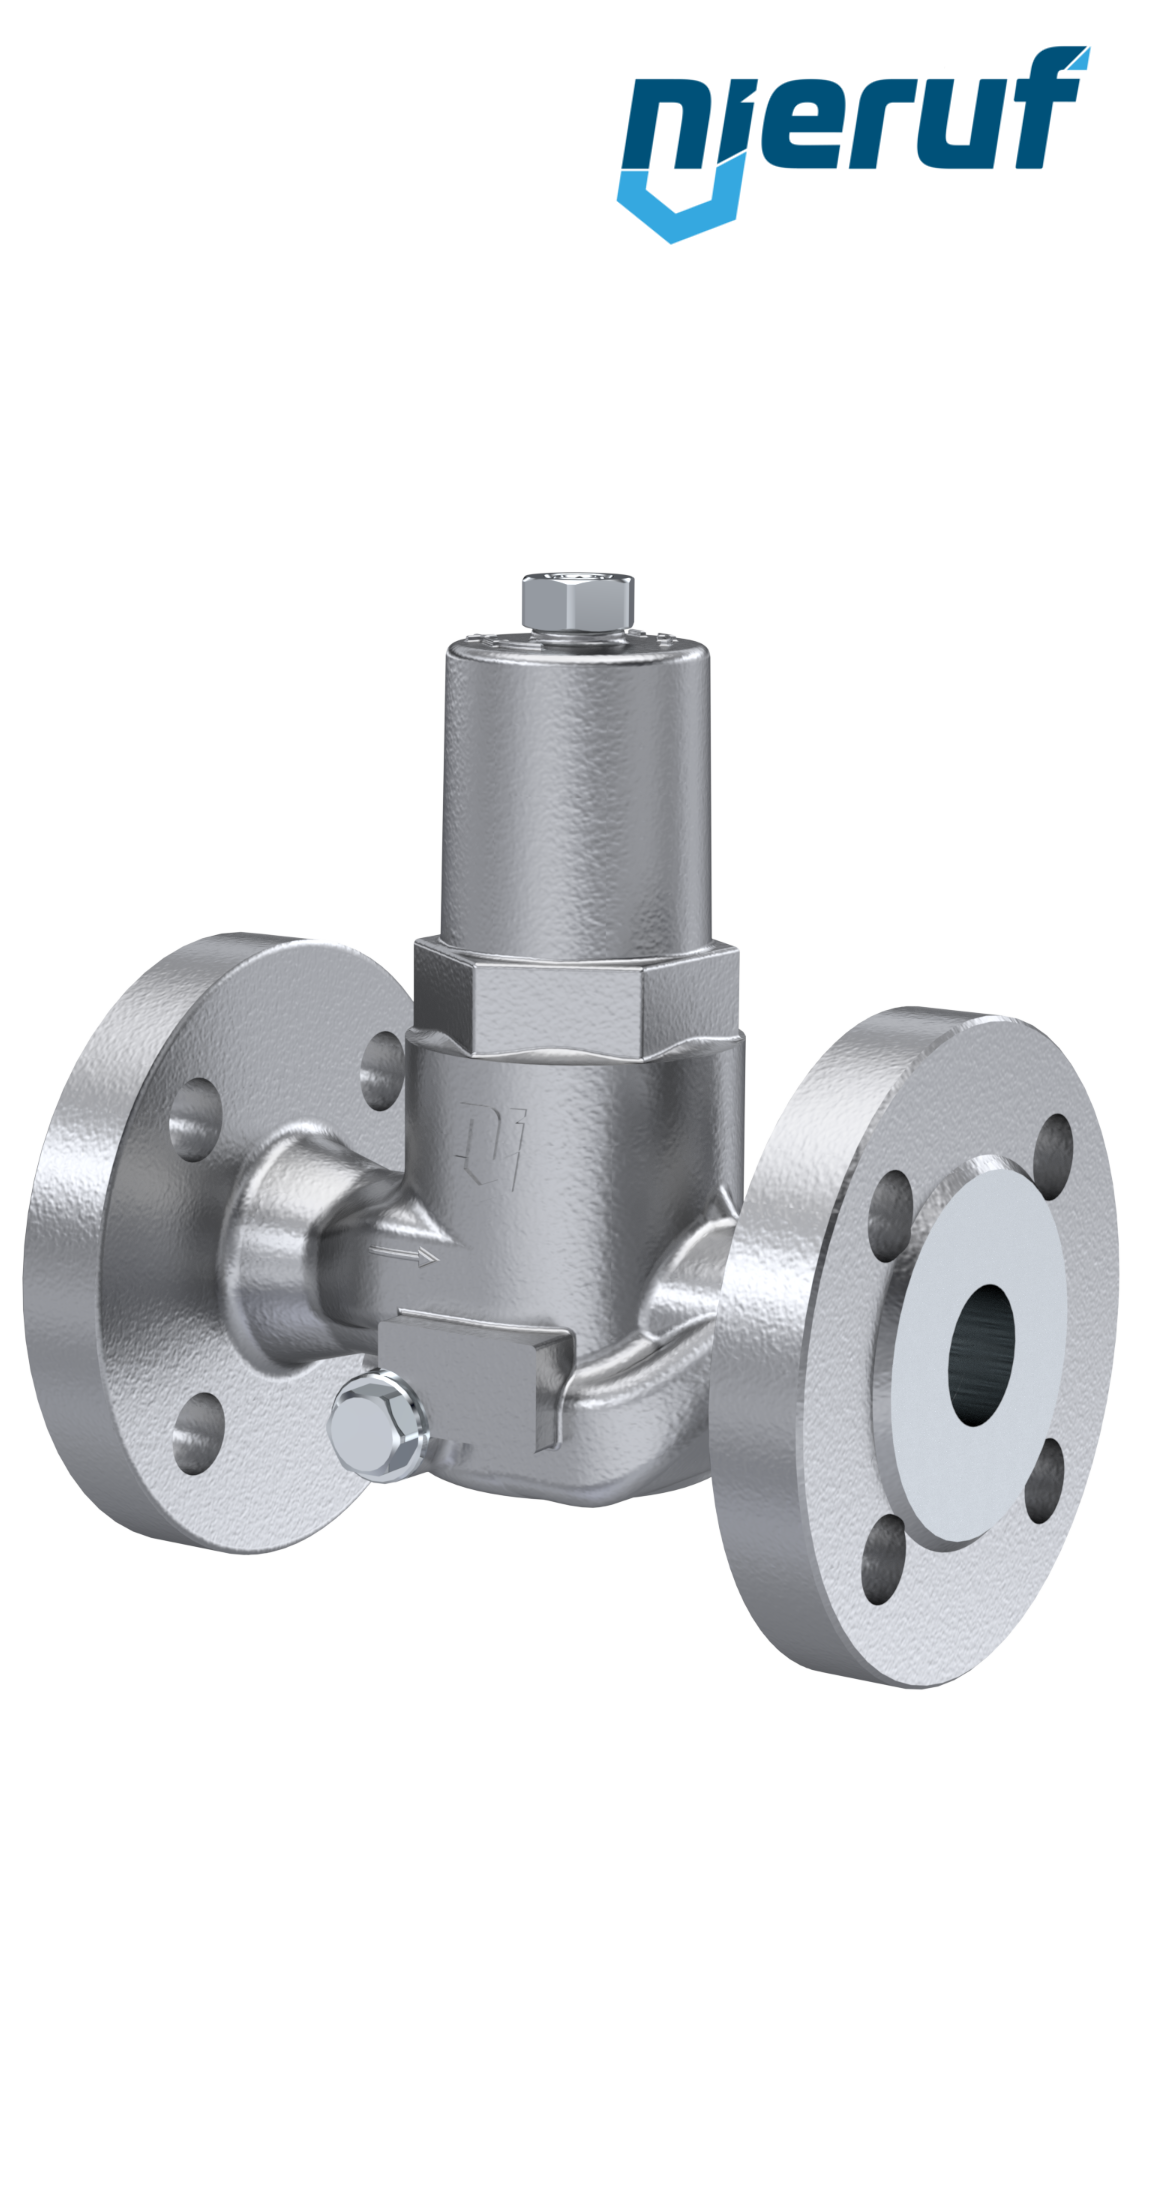 Flange-pressure reducing valve DN15 DM13 flange ANSI 150 stainless steel FPM / FKM 1.5 - 6.0 bar